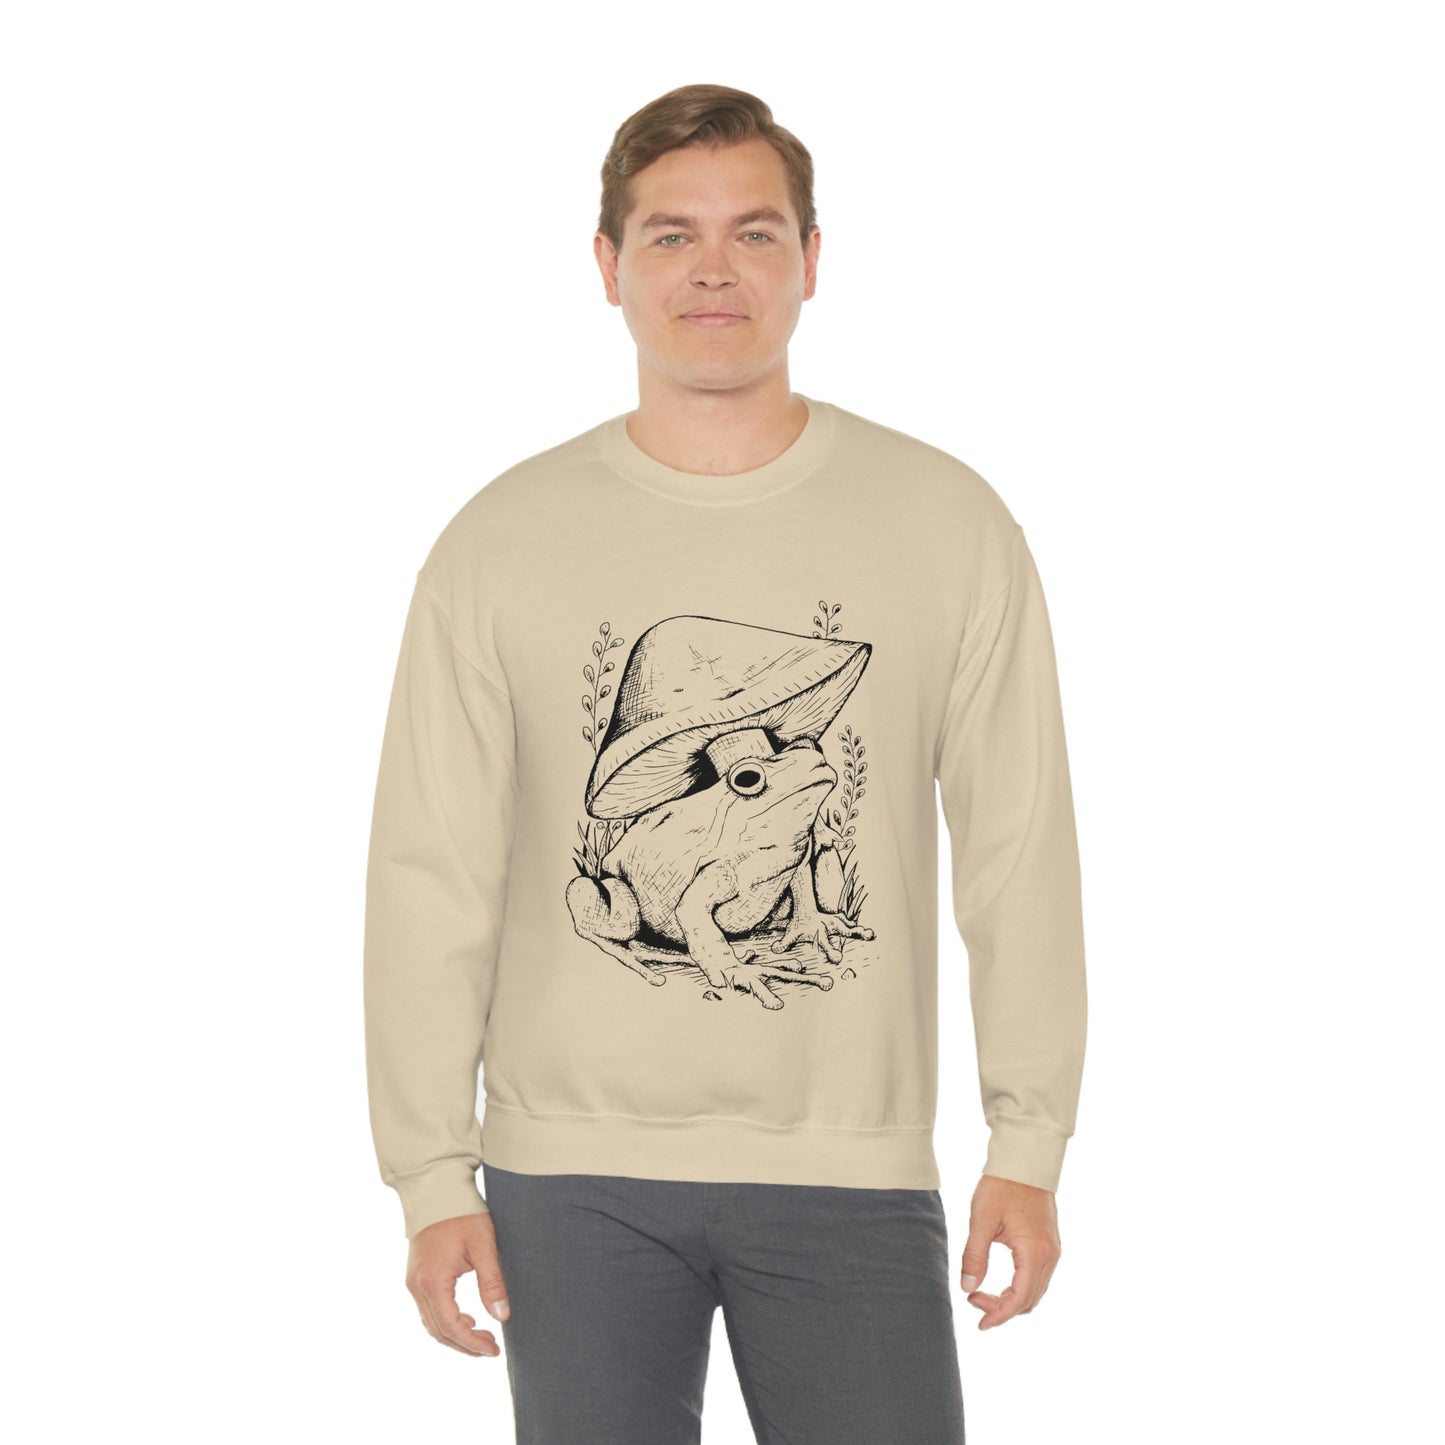 Cottagecore Aesthetic Mushrooms and Frog Hand Drawn Sweatshirt